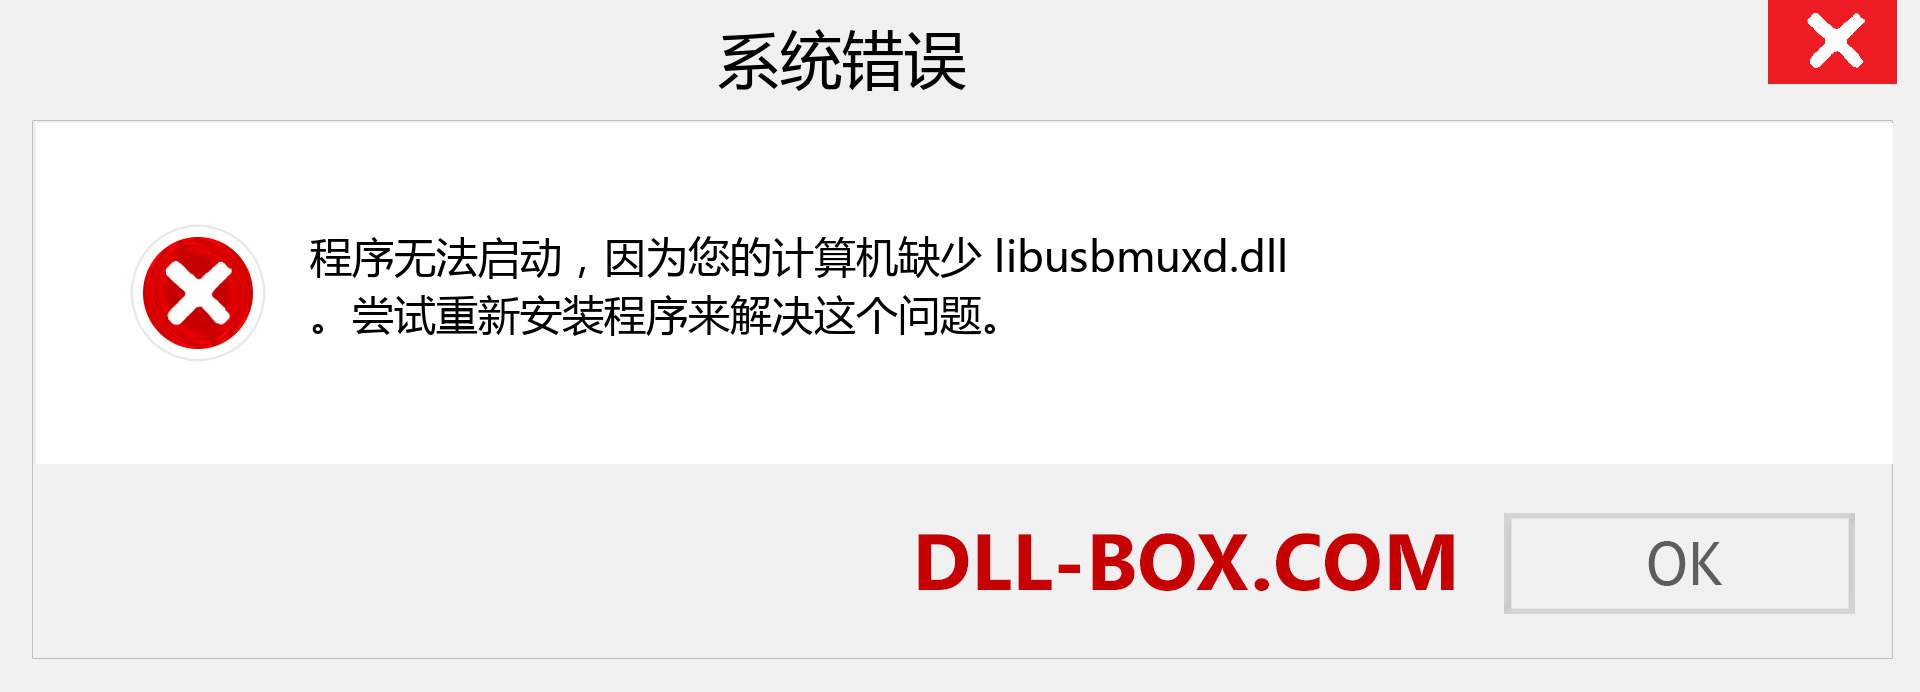 libusbmuxd.dll 文件丢失？。 适用于 Windows 7、8、10 的下载 - 修复 Windows、照片、图像上的 libusbmuxd dll 丢失错误